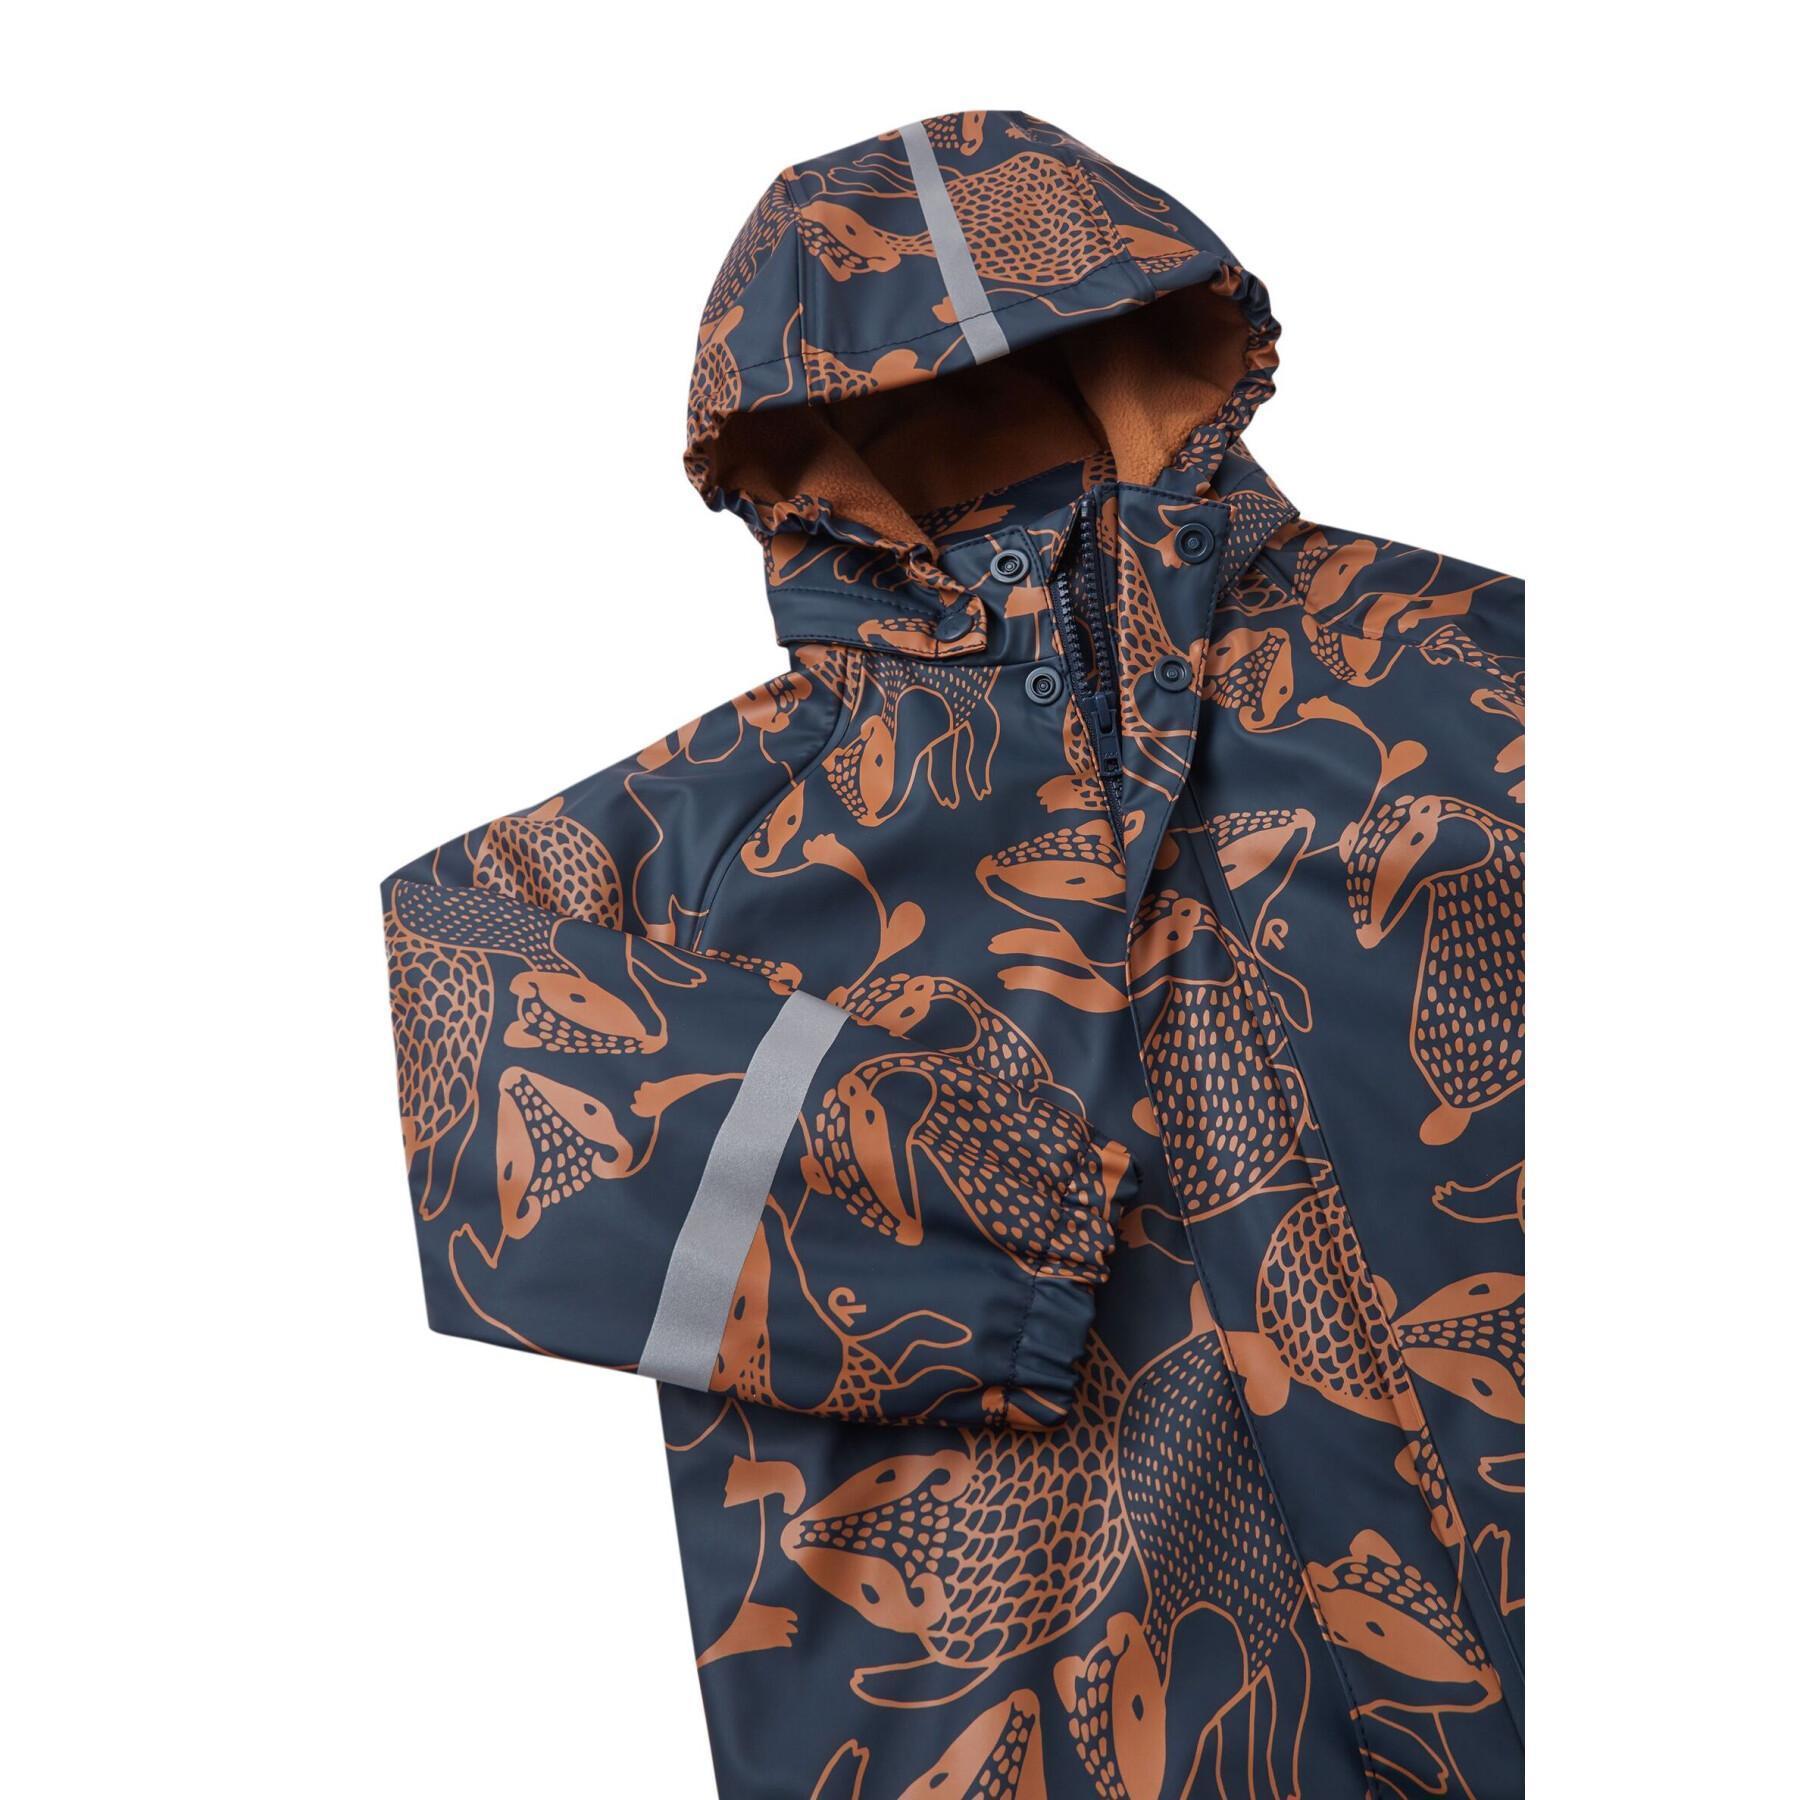 Waterproof jacket for children Reima Koski